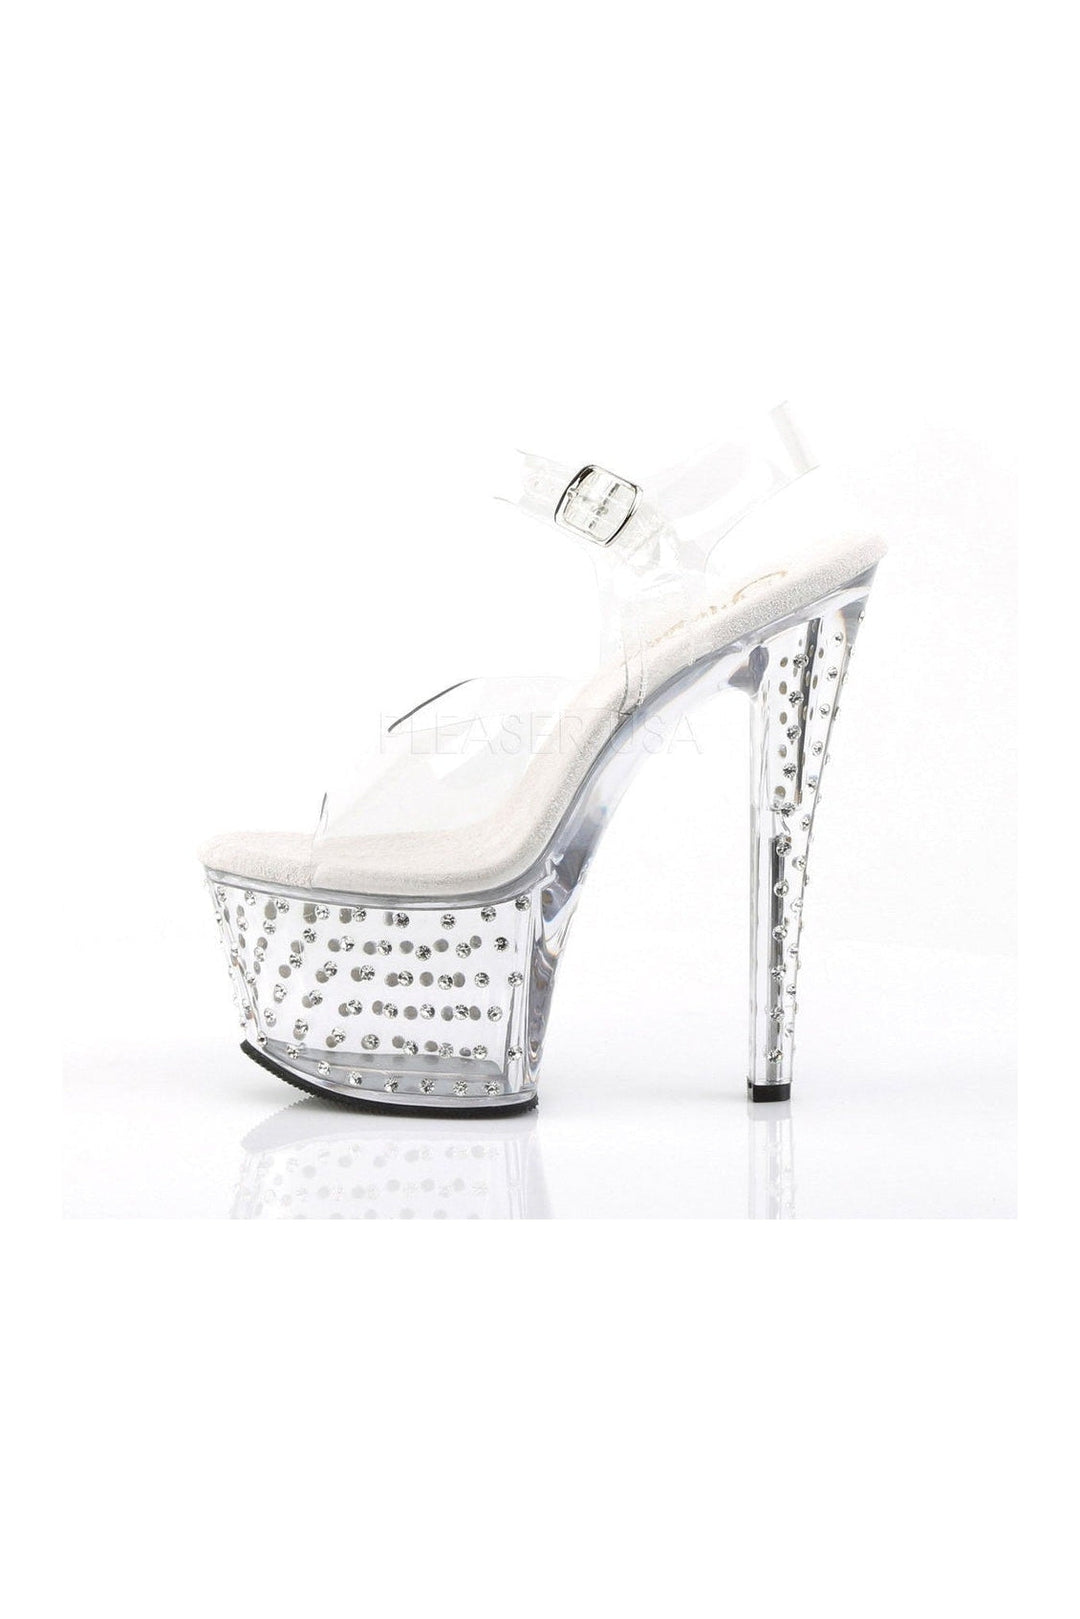 Pleaser Sandals Platform Stripper Shoes | Buy at Sexyshoes.com